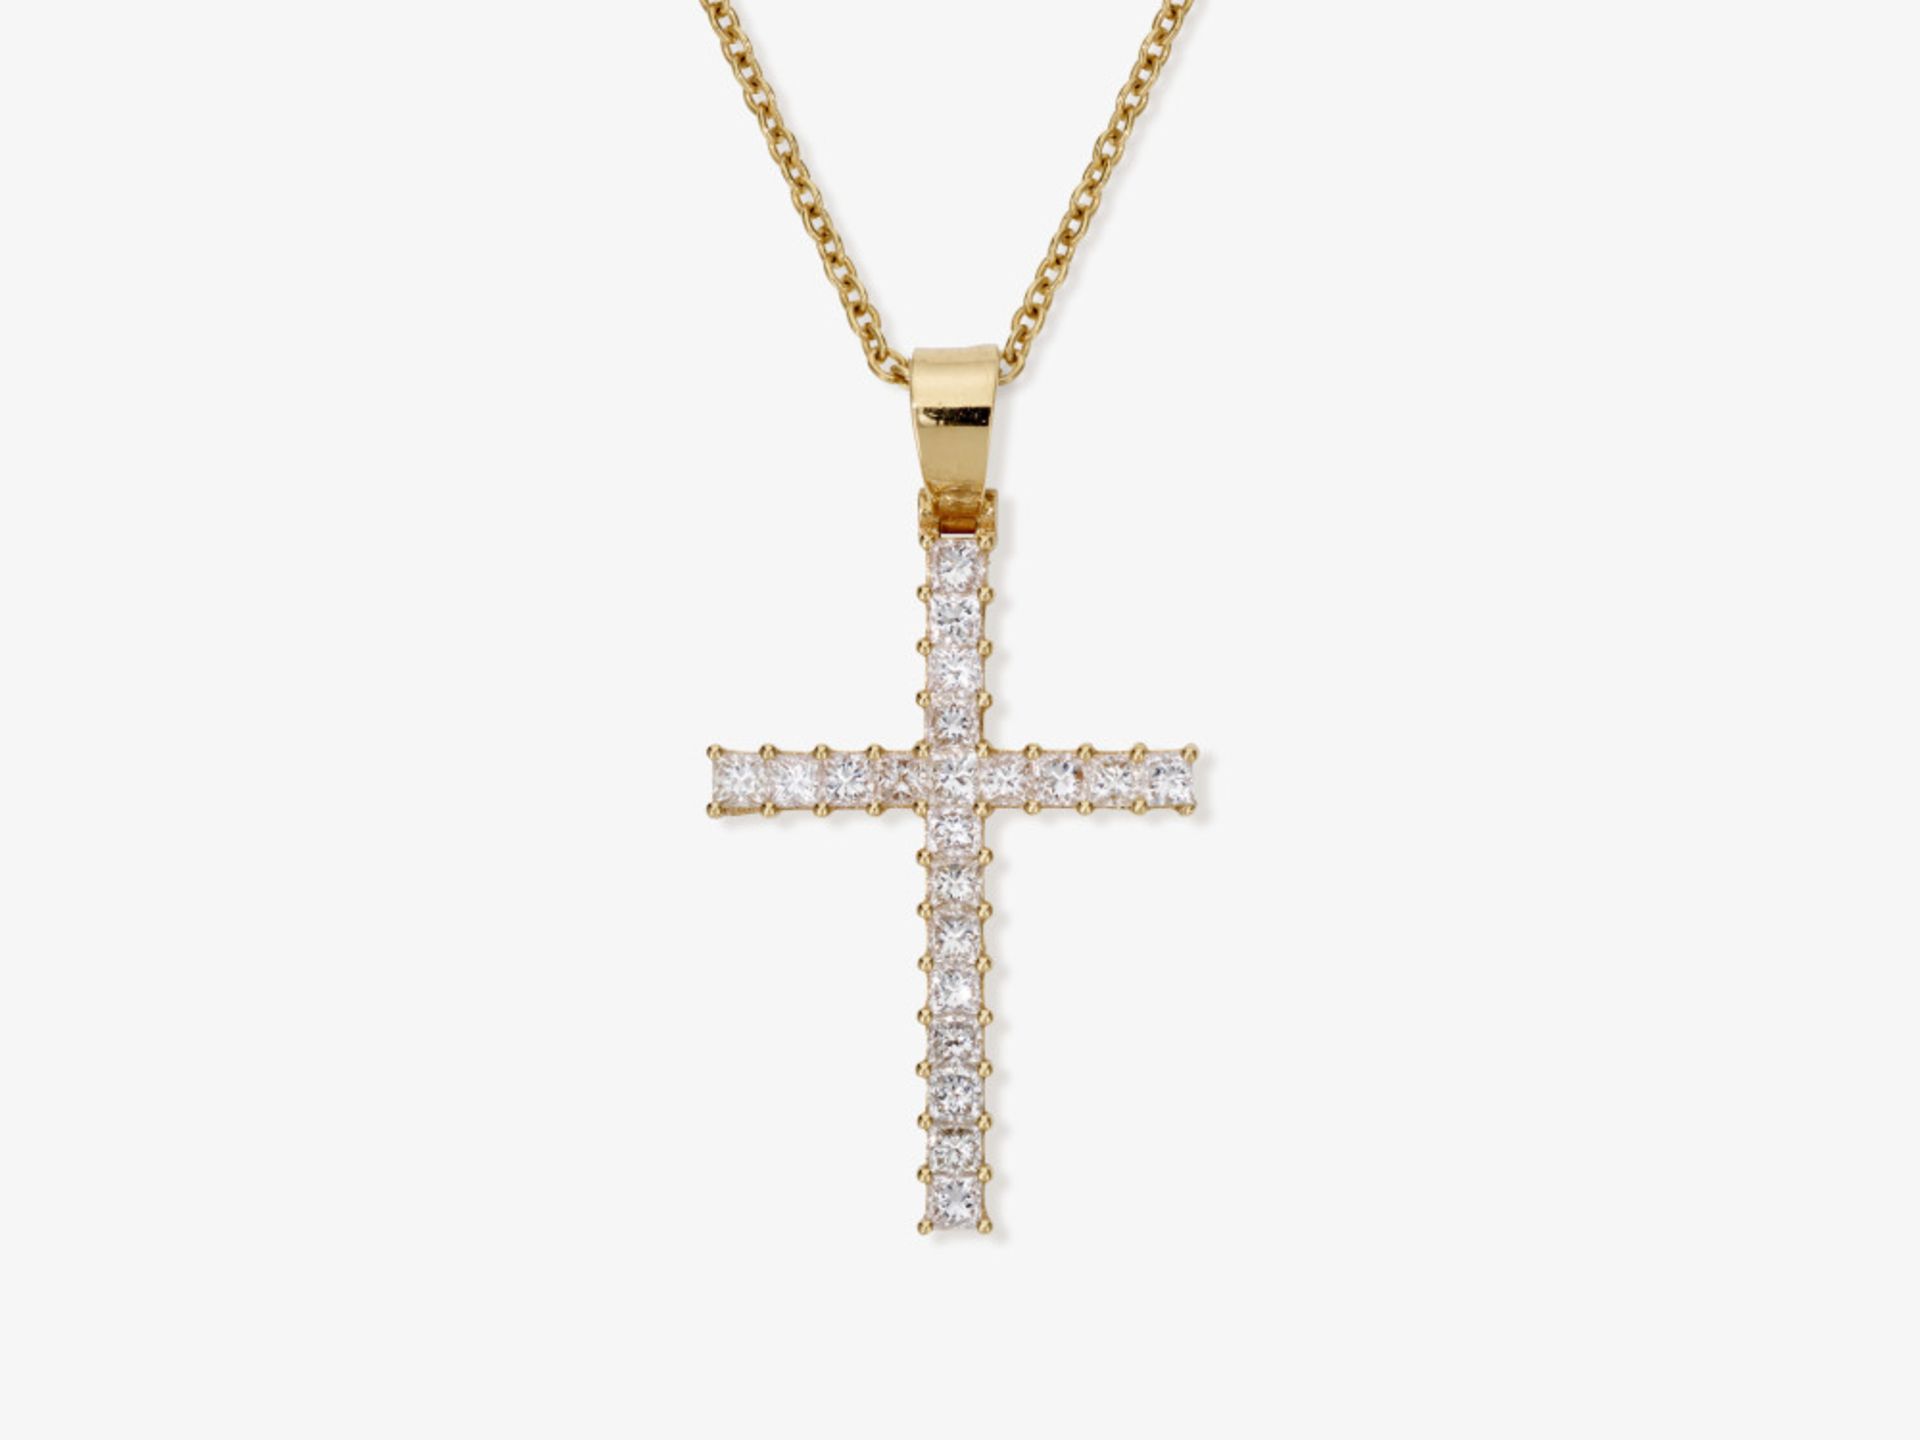 A cross pendant necklace decorated with princess-cut diamonds - Belgium